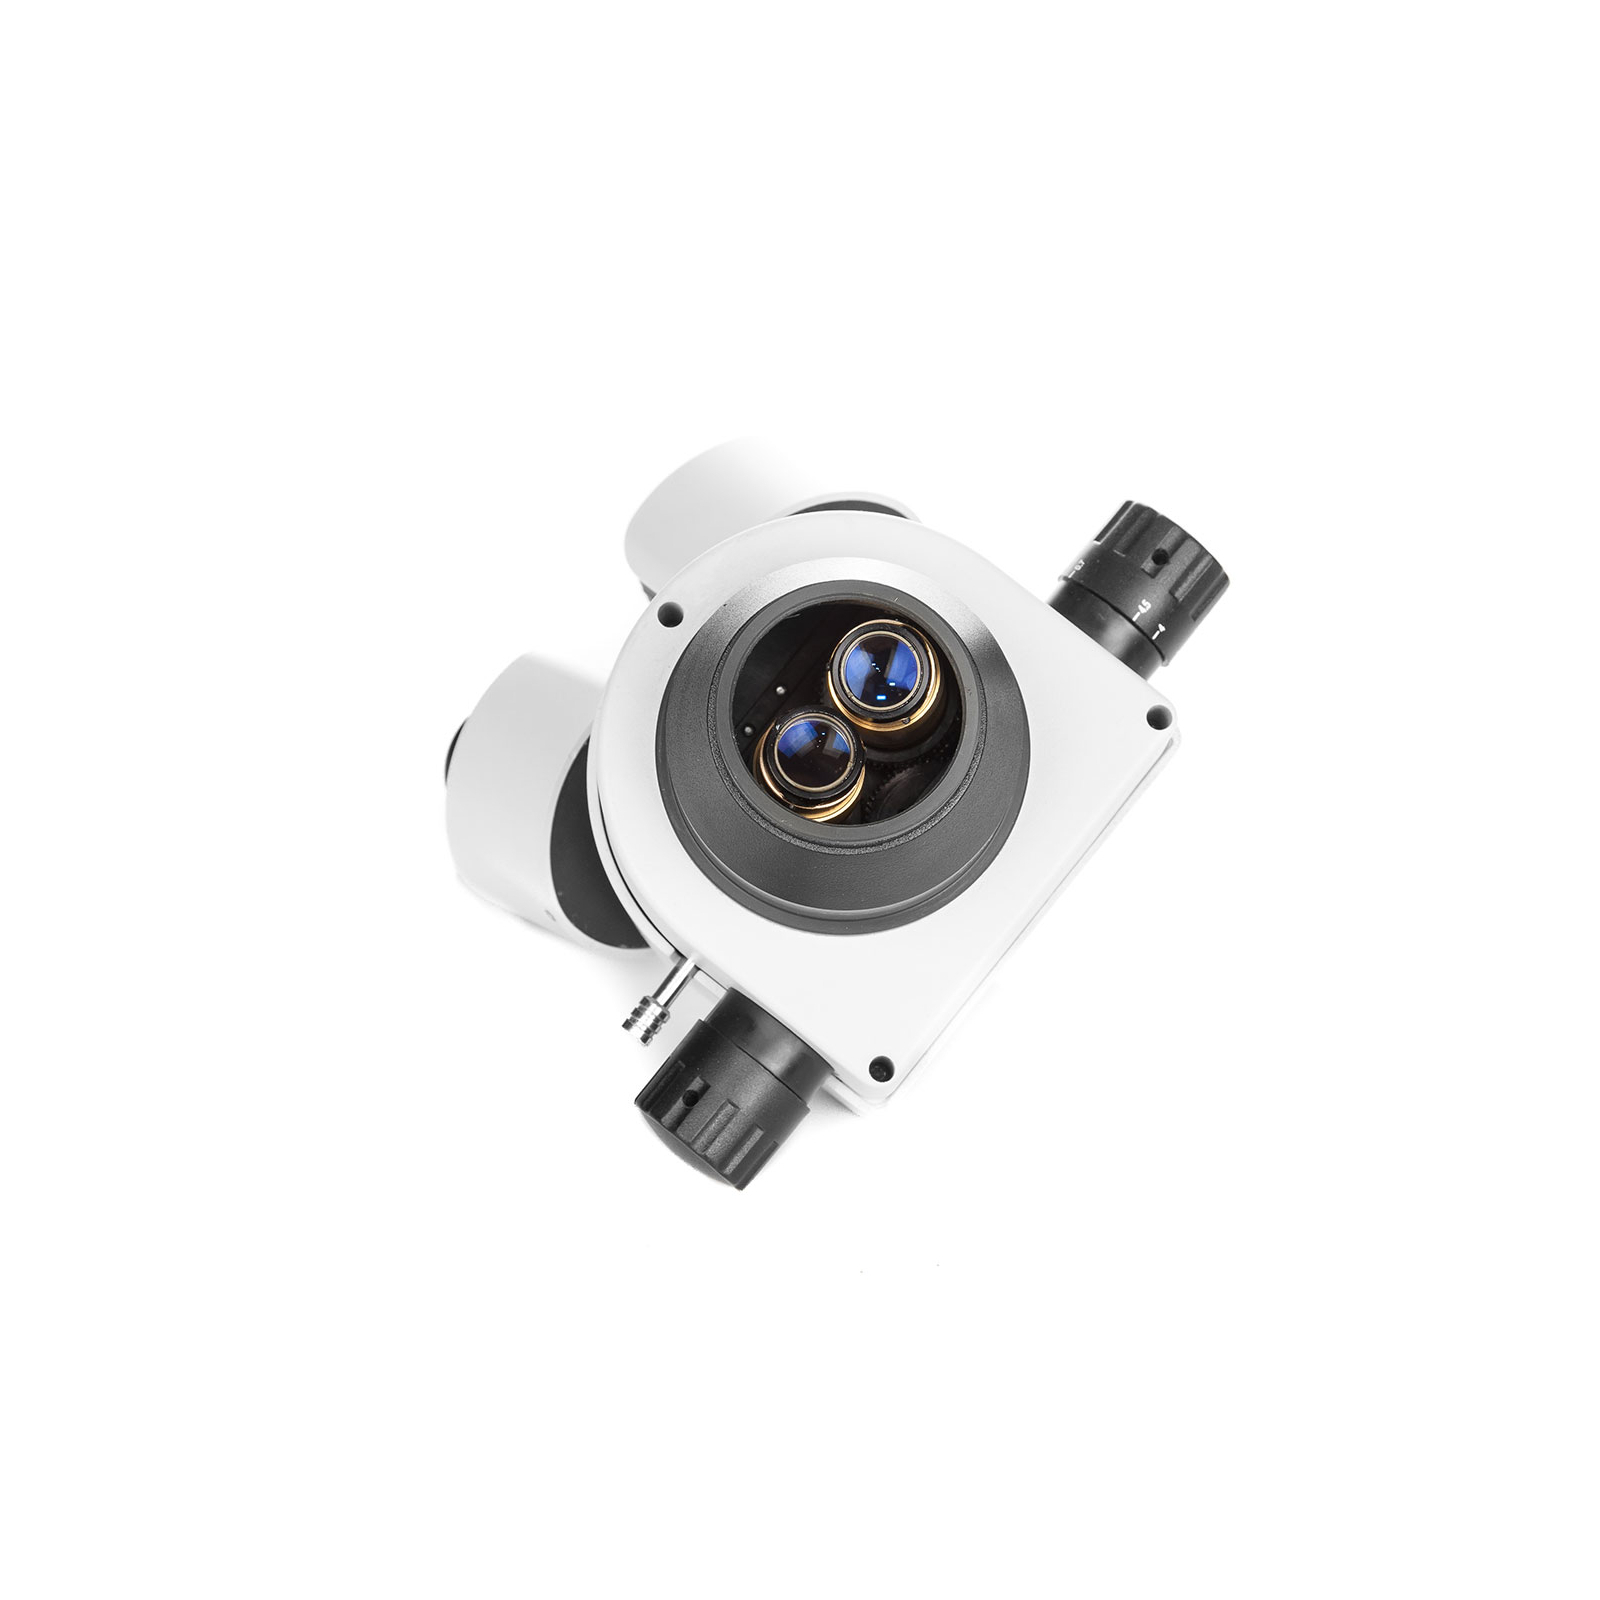 Микроскоп Konus Crystal Pro 7-45x Stereo (5424) изображение 7